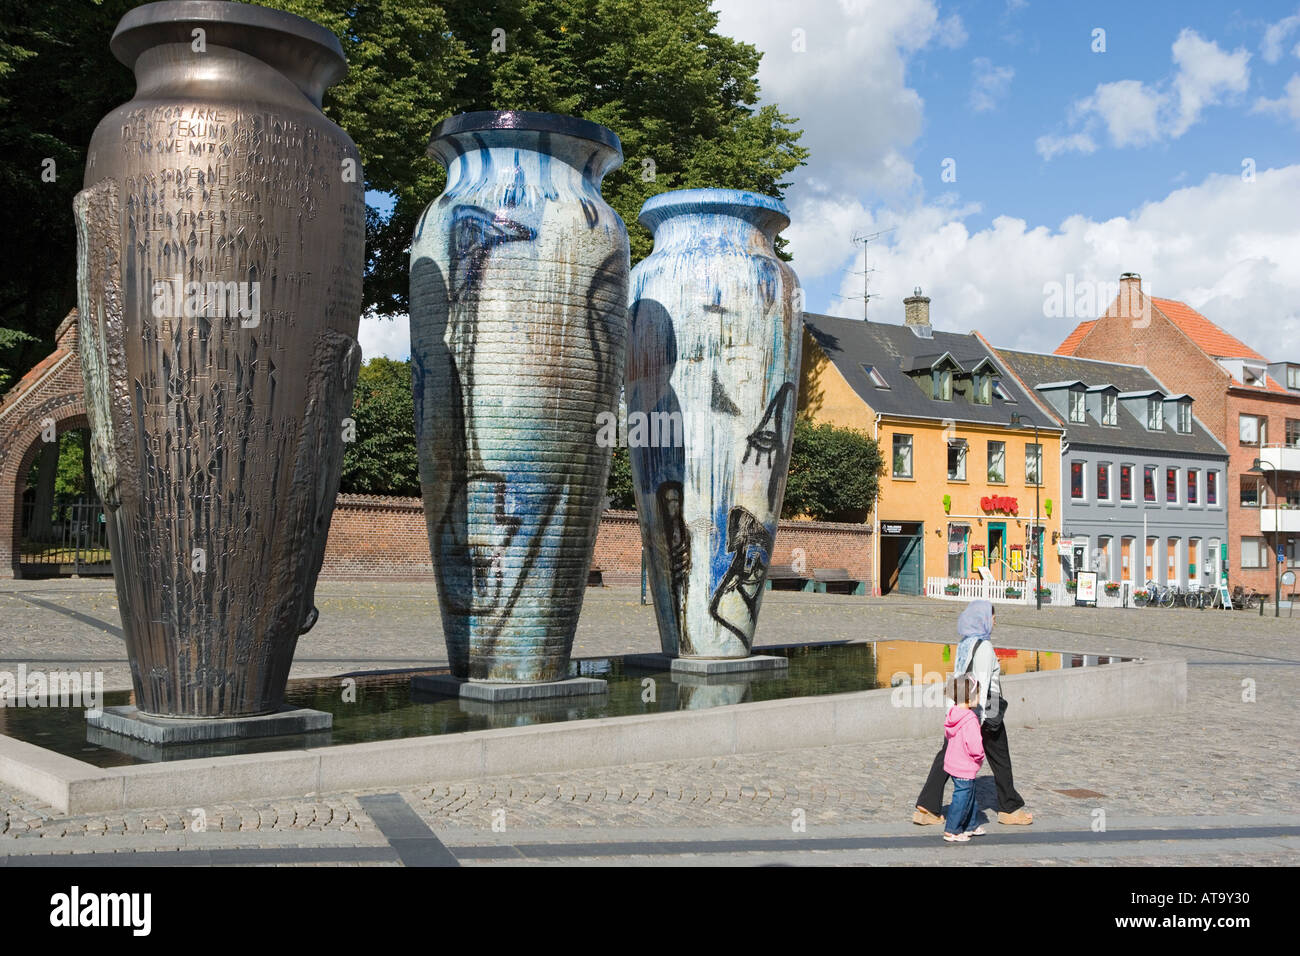 Roskilde Denmark The Roskilde Jars by Peter Brandes Stock Photo - Alamy